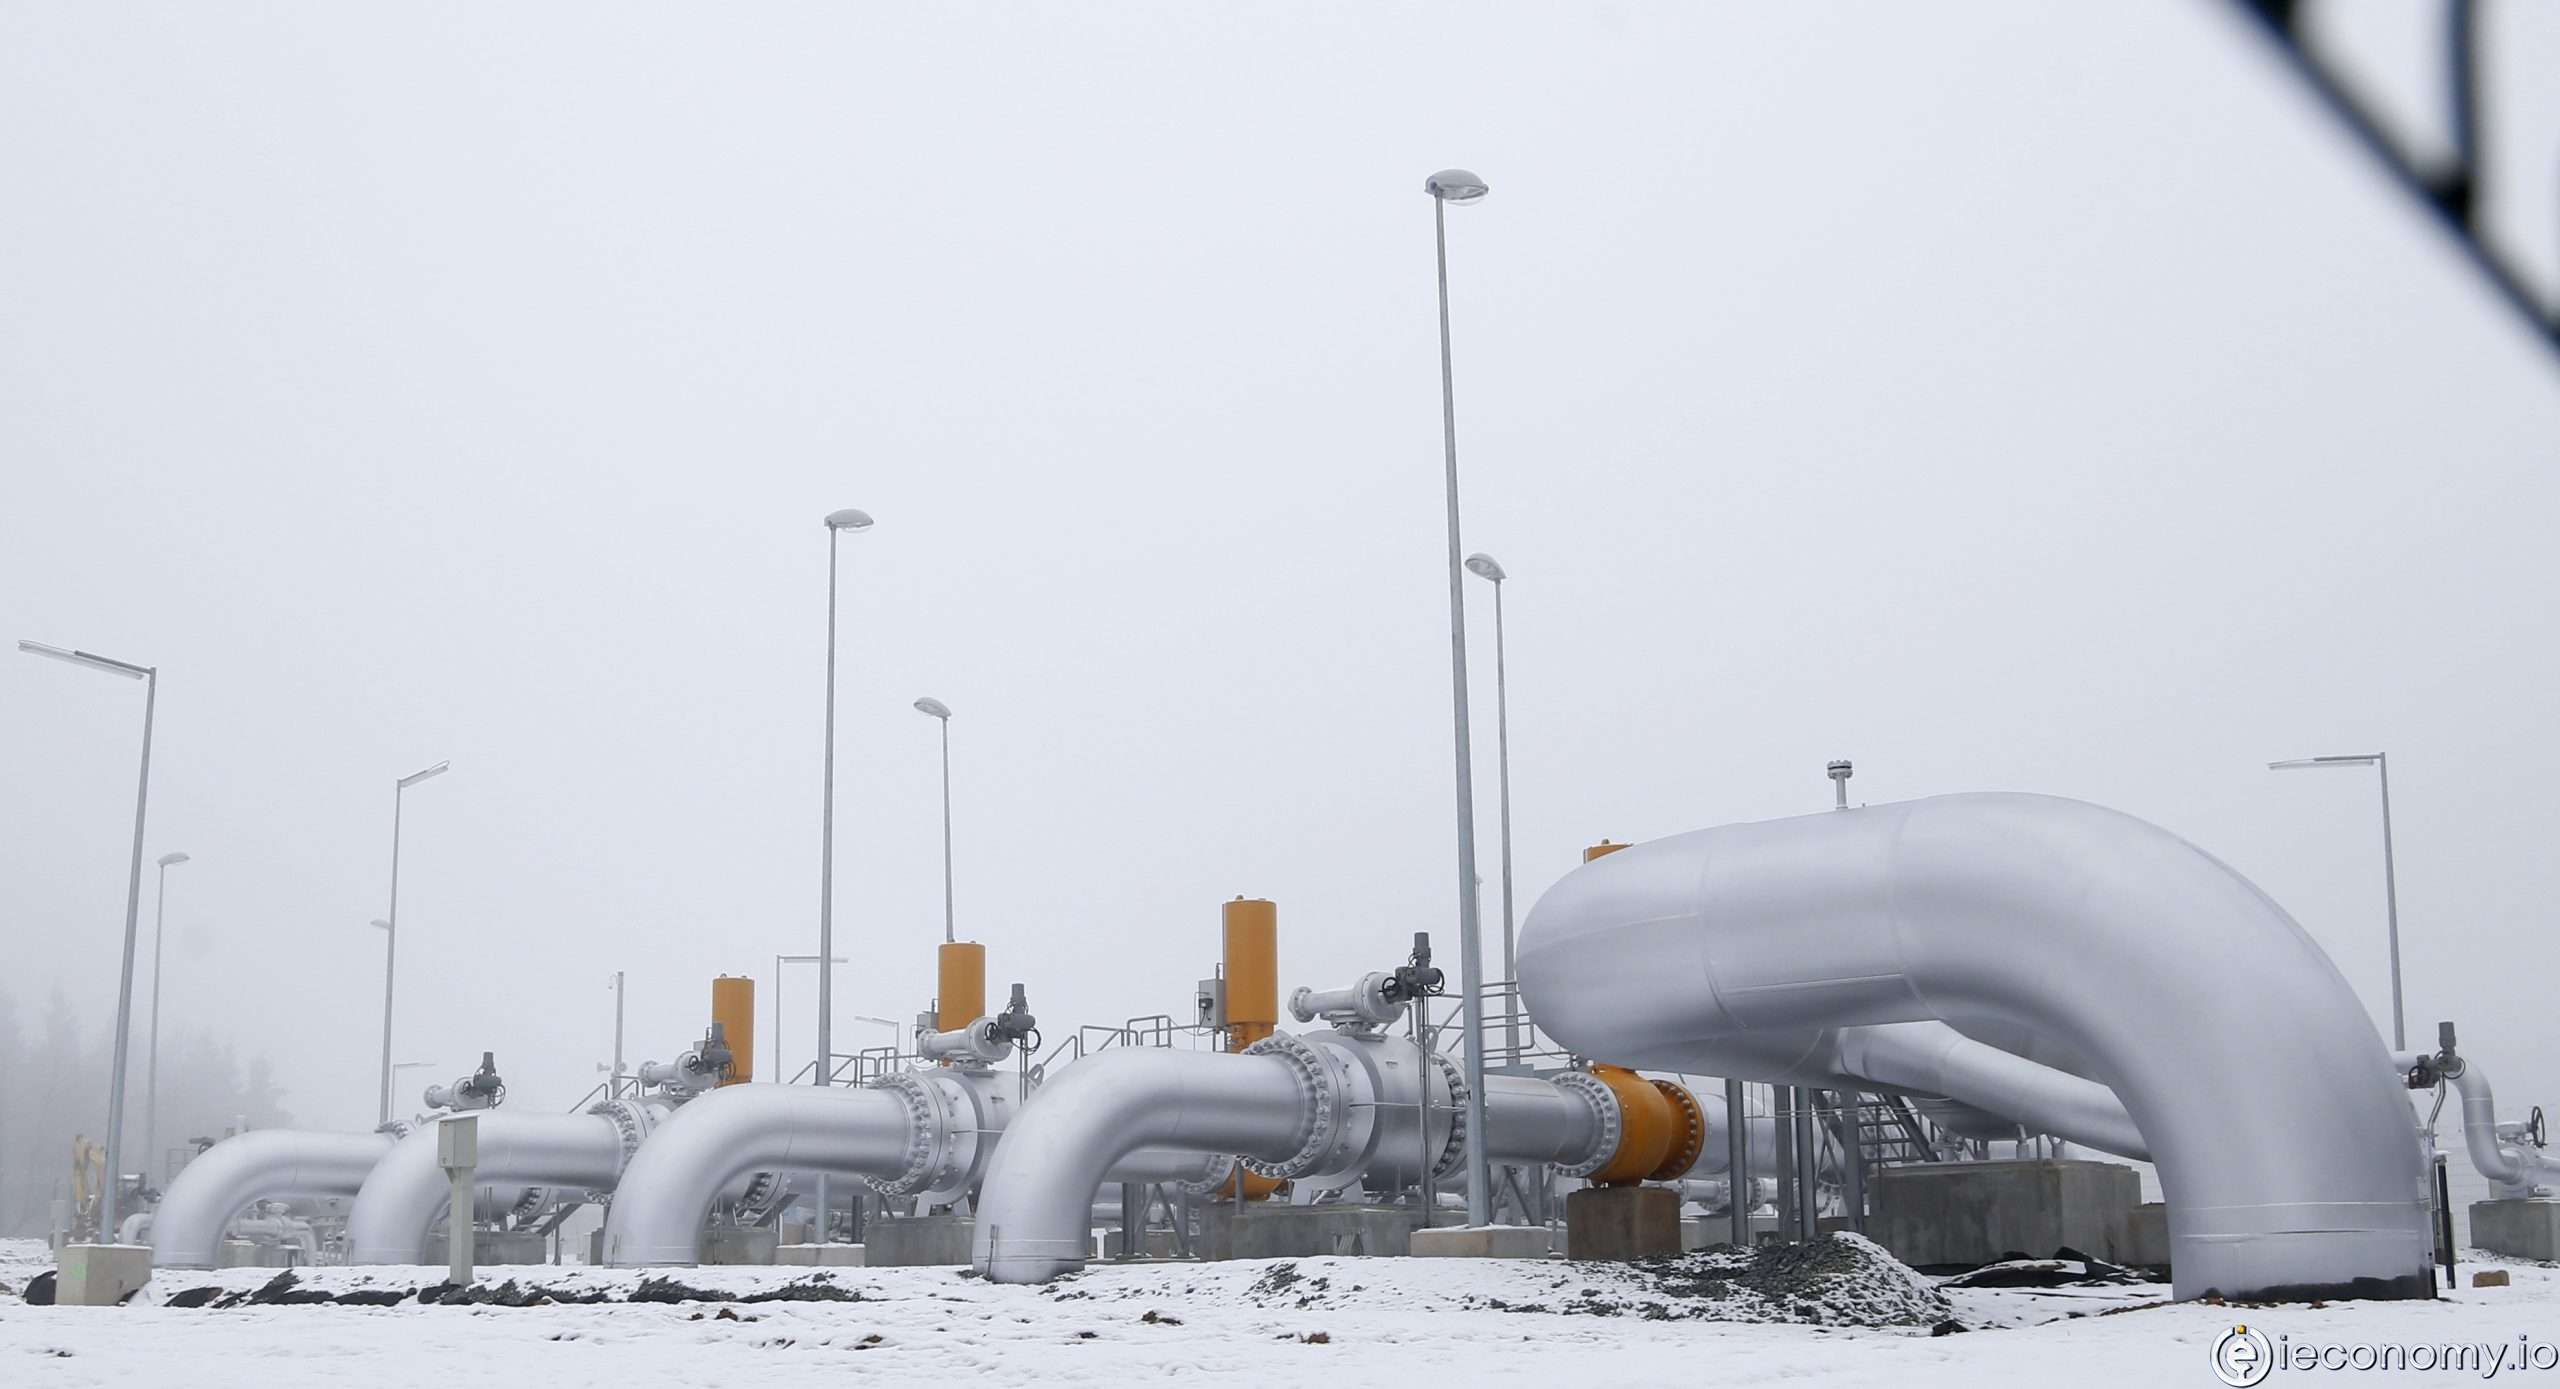 European gas prices rose sharply again on Tuesday